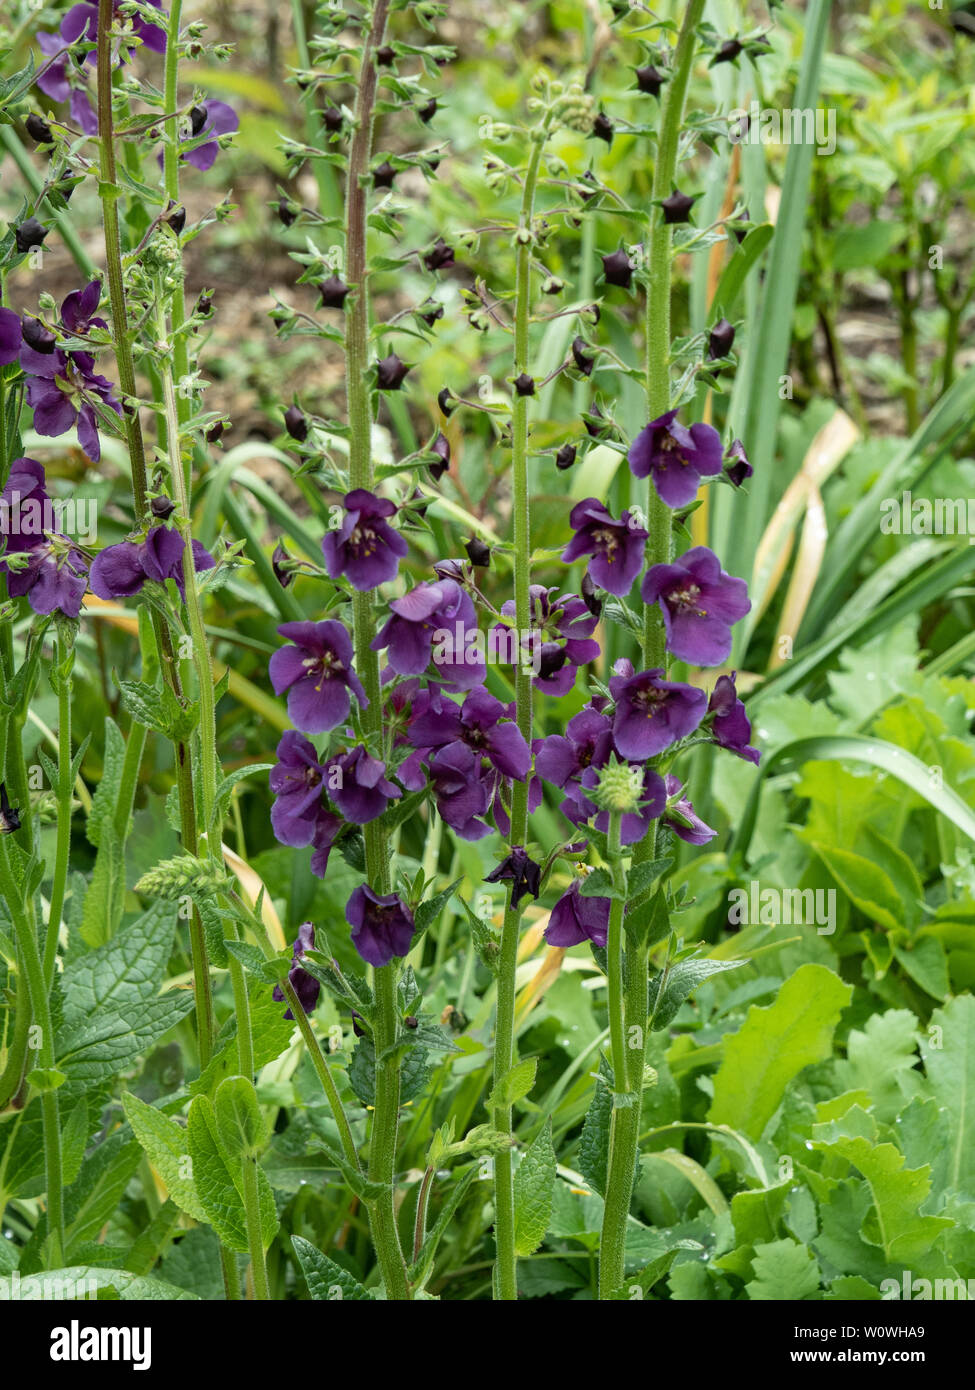 A group of Verbascum phoenicum Violetta showing the deep purple flower spikes Stock Photo